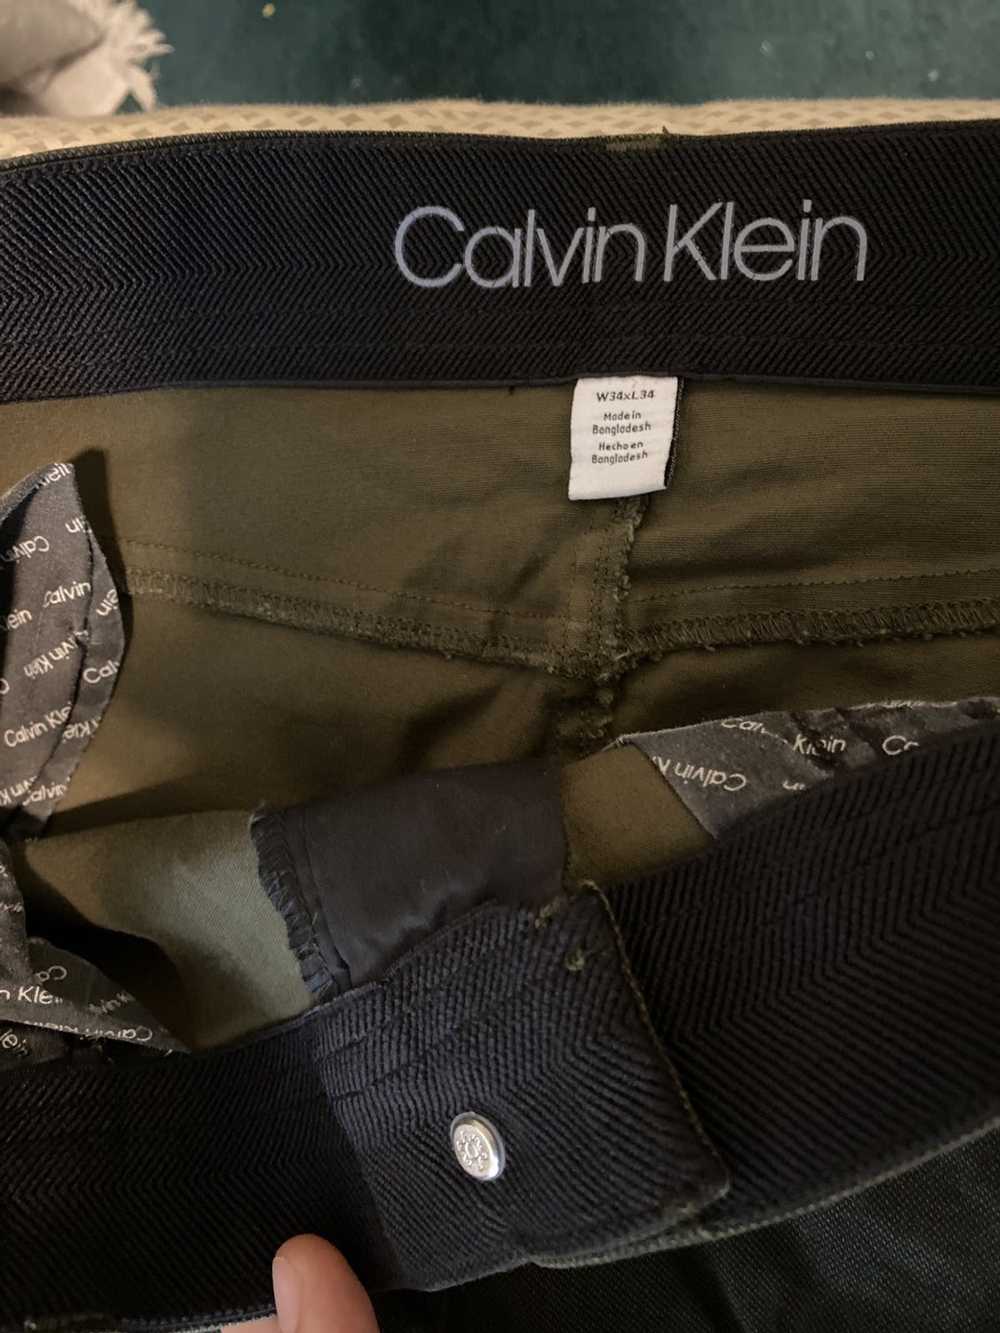 Calvin Klein Calvin Klein stretchy jeans 2 pairs … - image 5